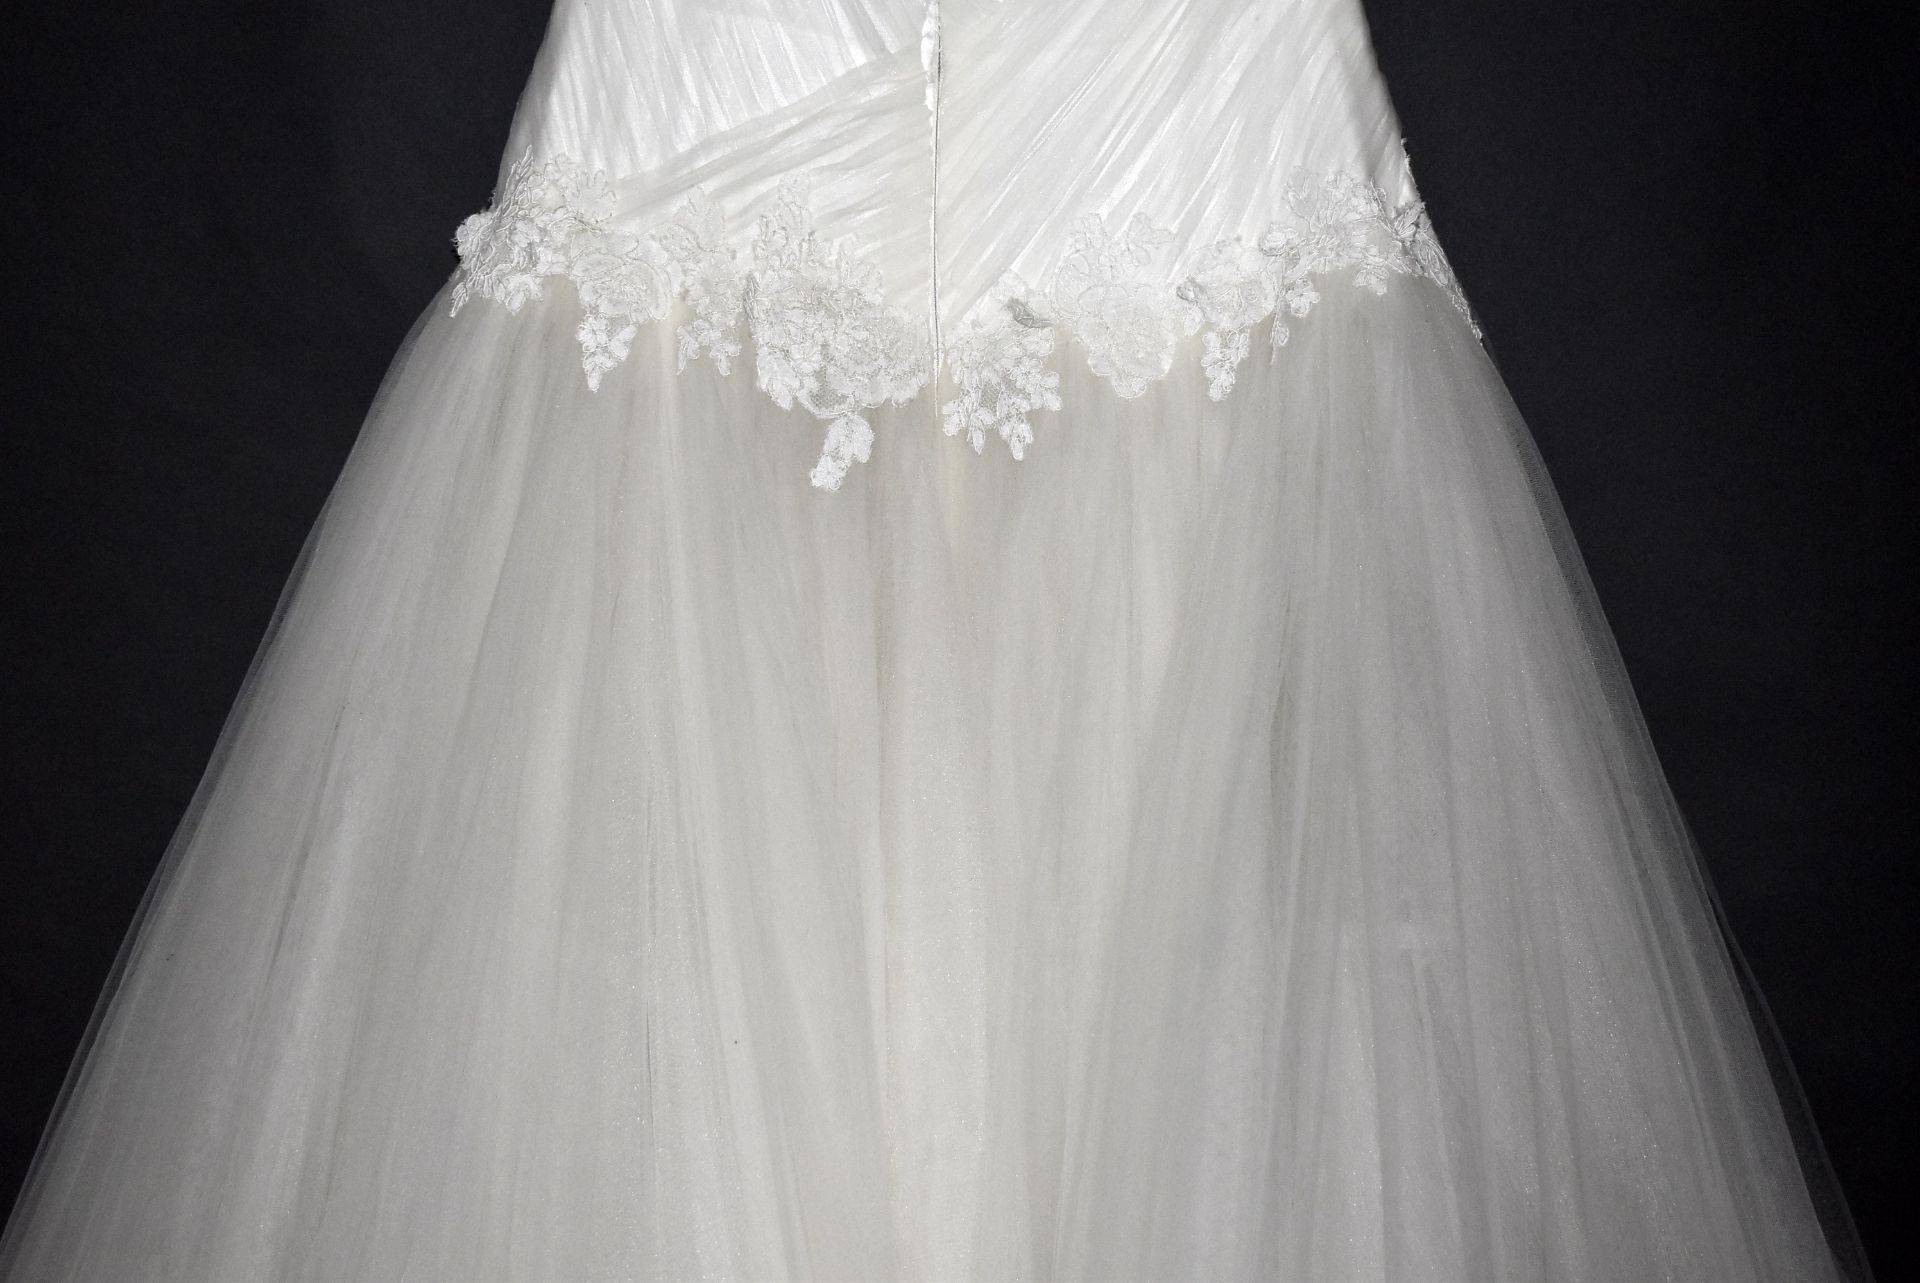 1 x LUSAN MANDONGUS Strapless Chiffon And Lace Designer Wedding Dress Bridal Gown RRP £2,600 UK 12 - Image 4 of 6